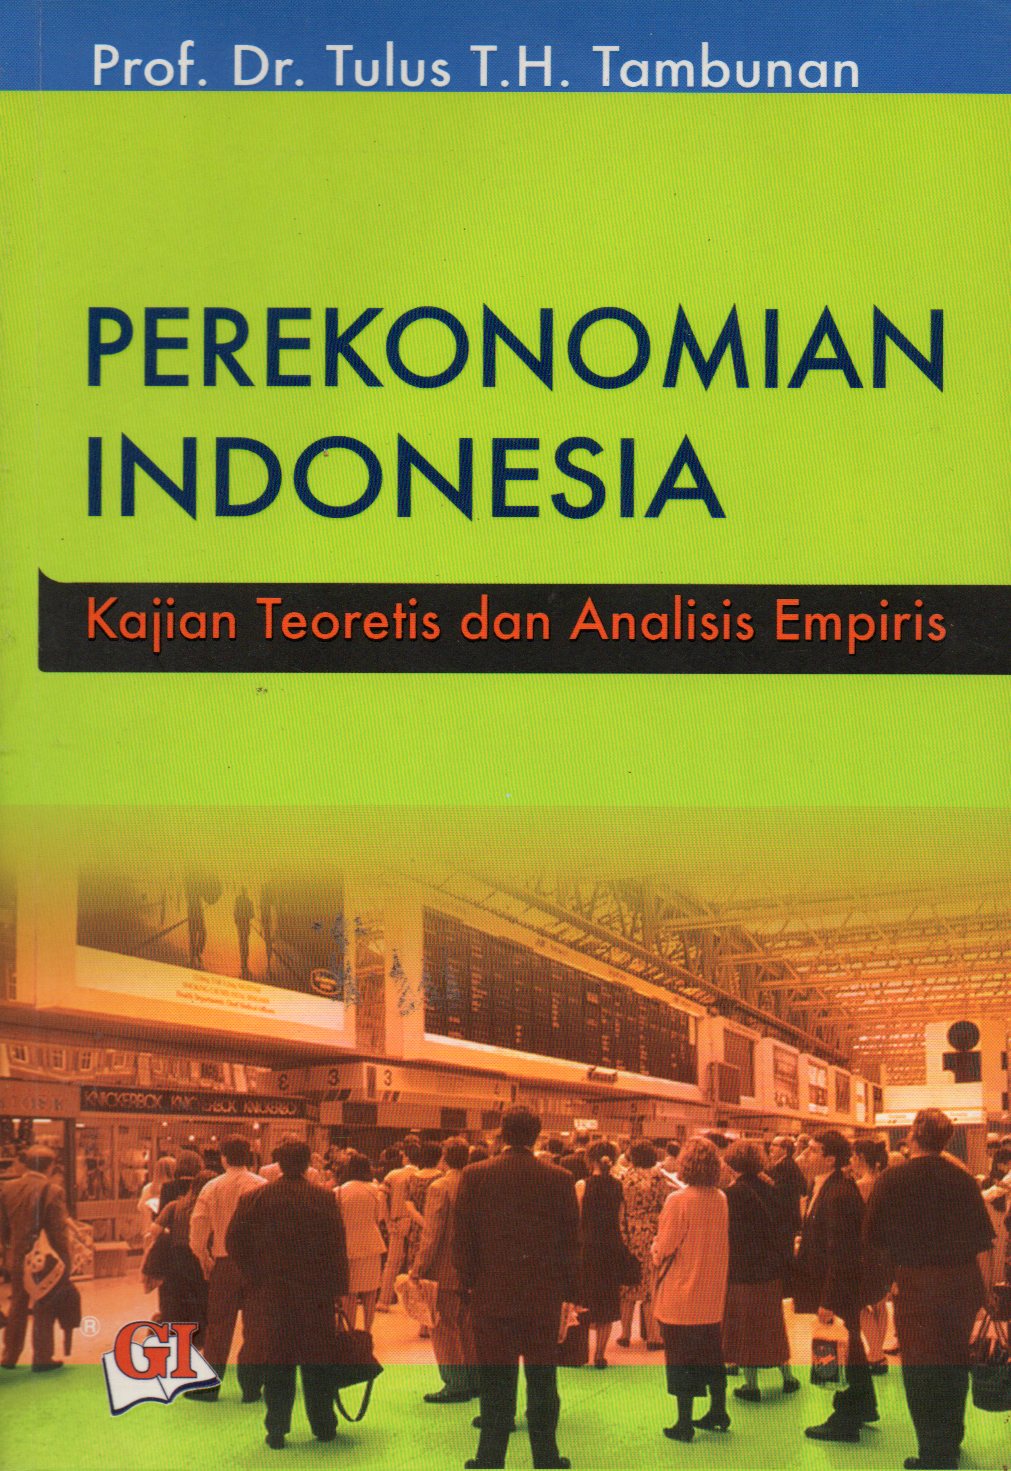 Perekonomian Indonesia : Kajian Teoretis dan Analisis Empiris